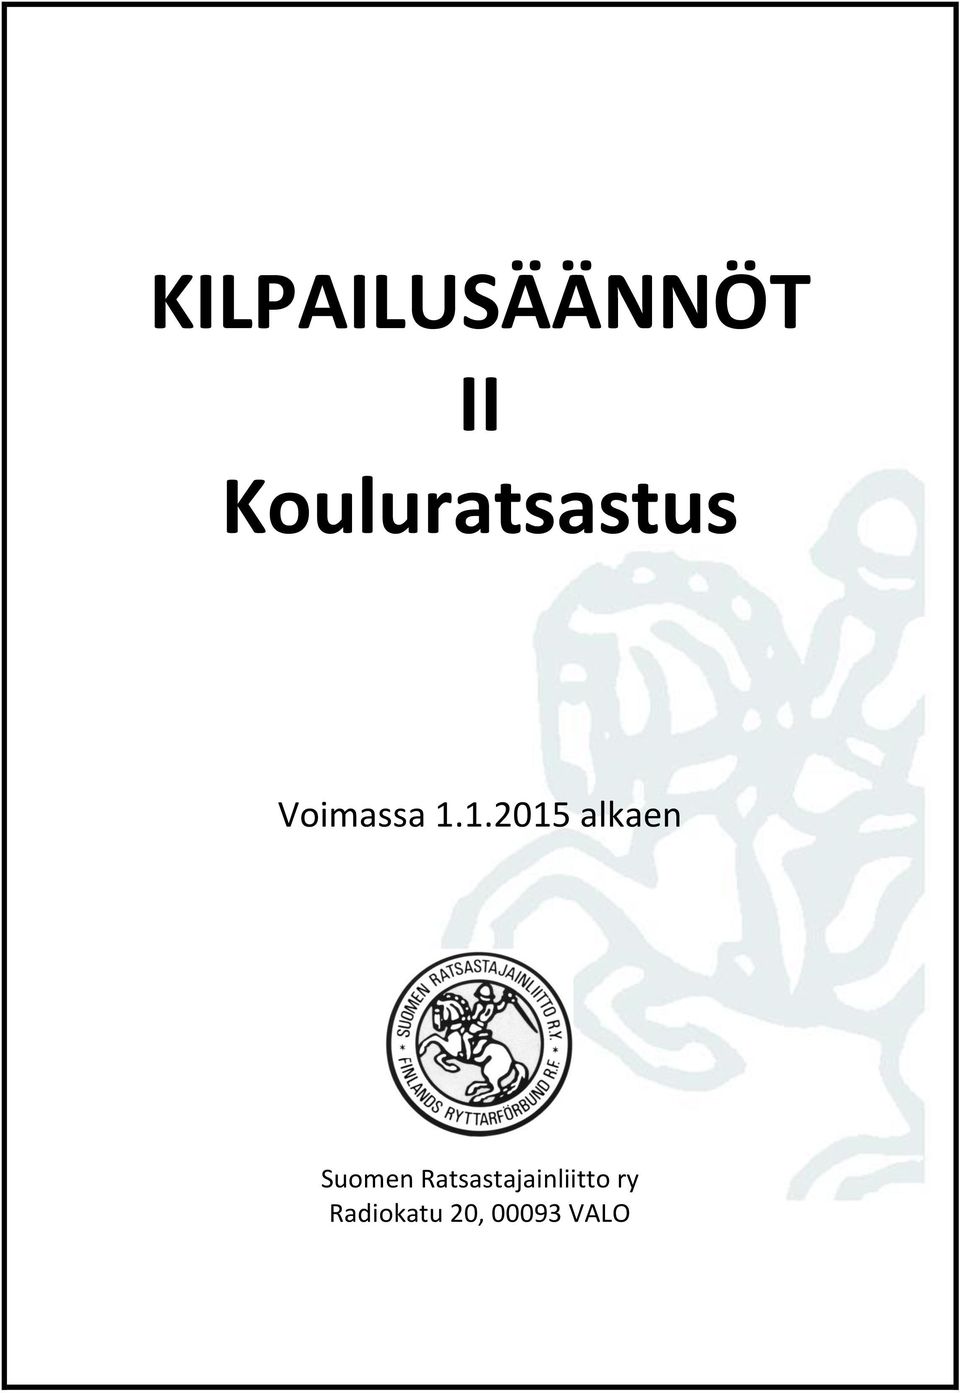 1.2015 alkaen Suomen